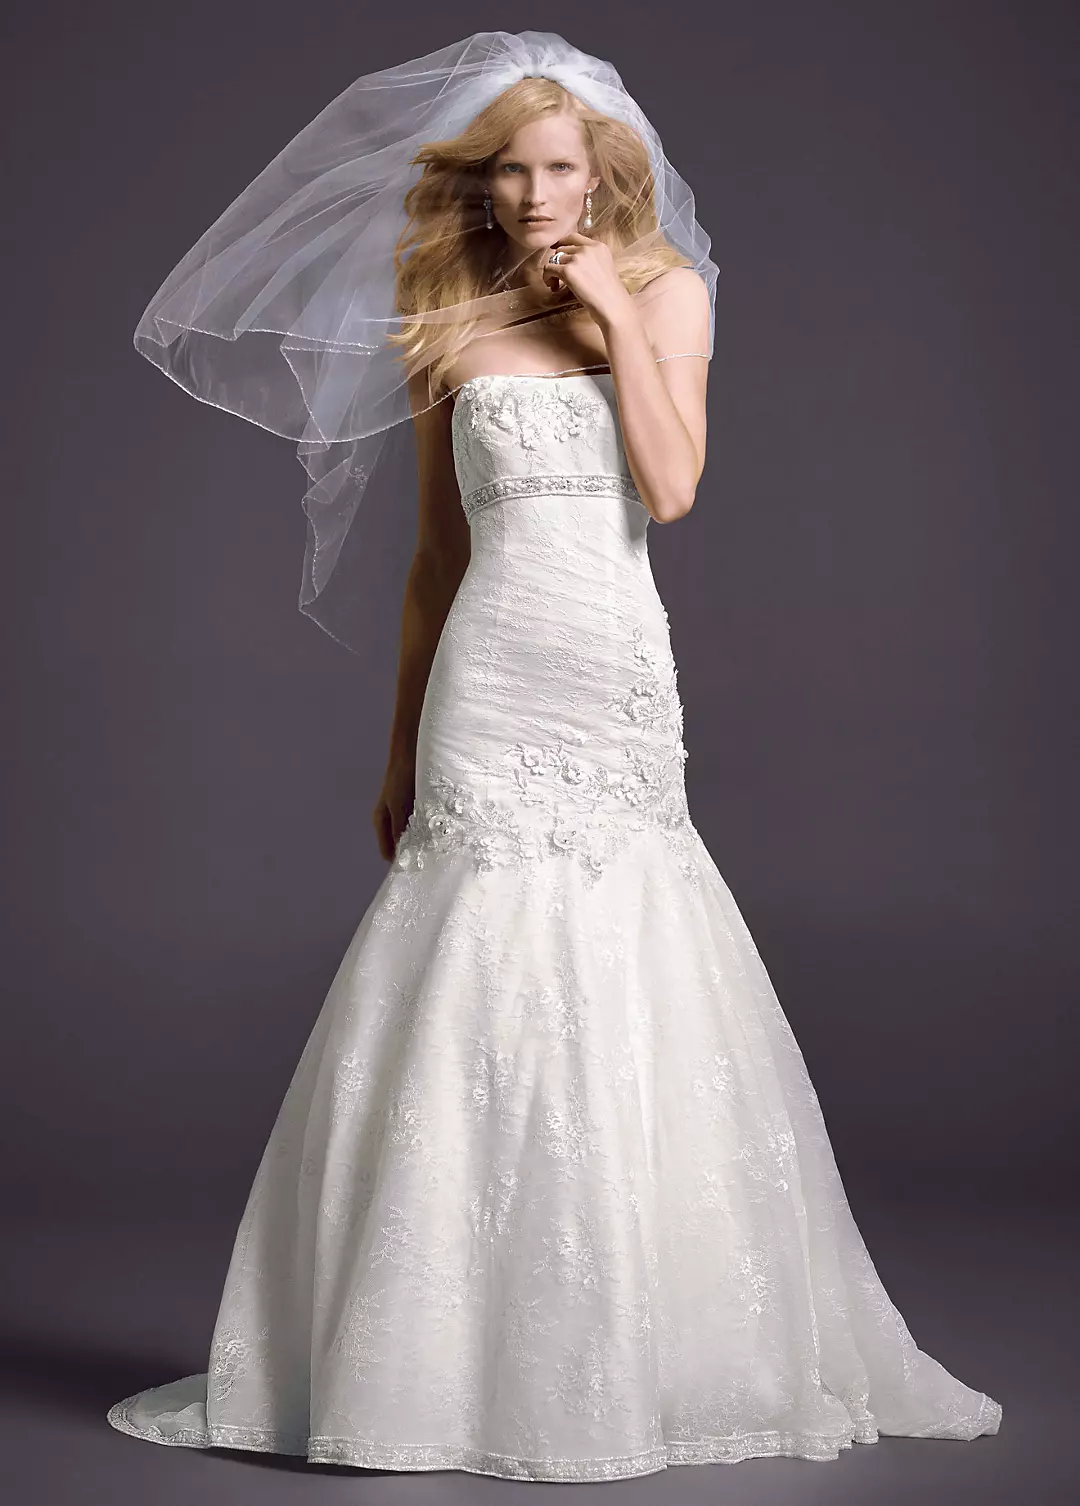 Petite Lace Wedding Dress with Floral Details Image